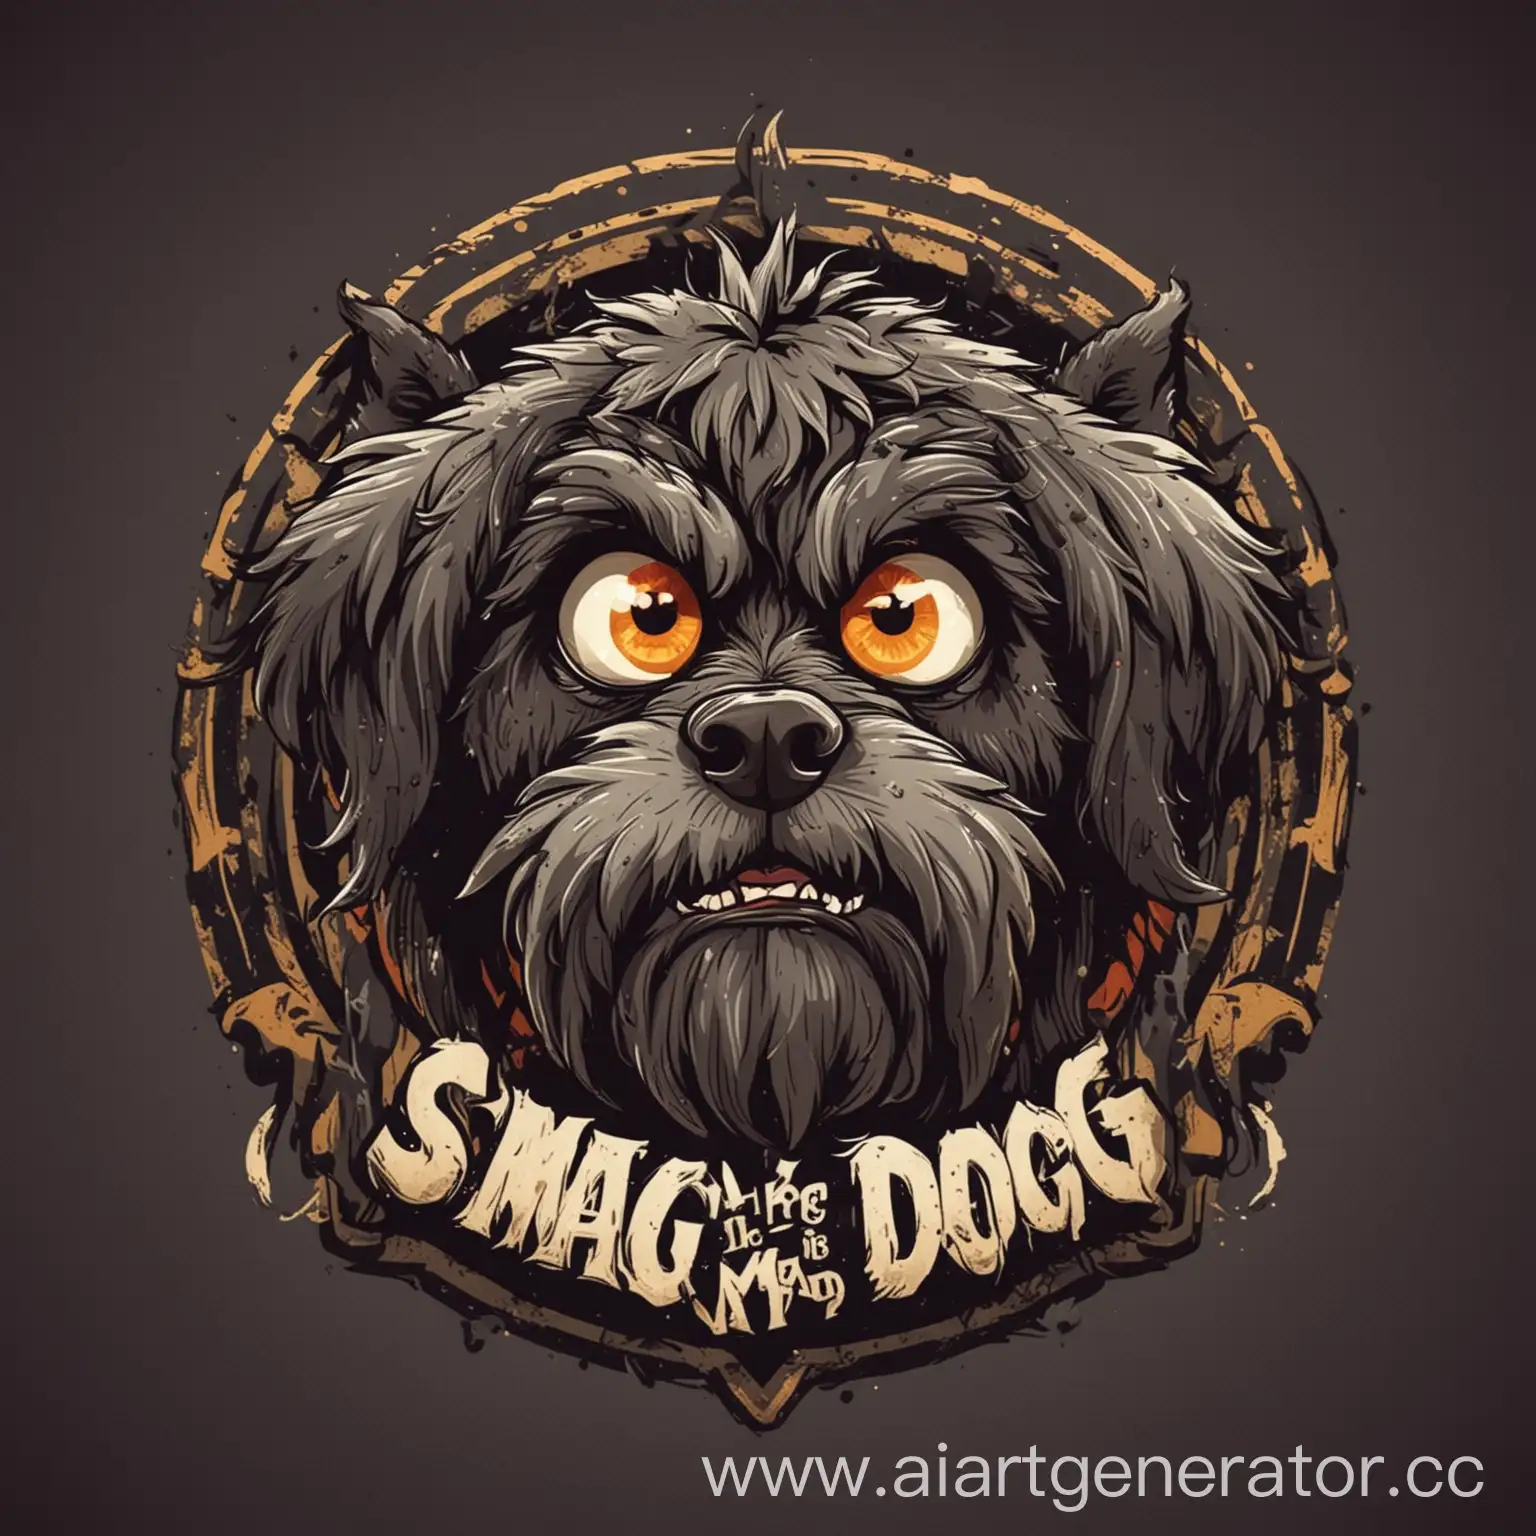 ThreeEyed-Shaggy-Mad-Dog-Logo-Design